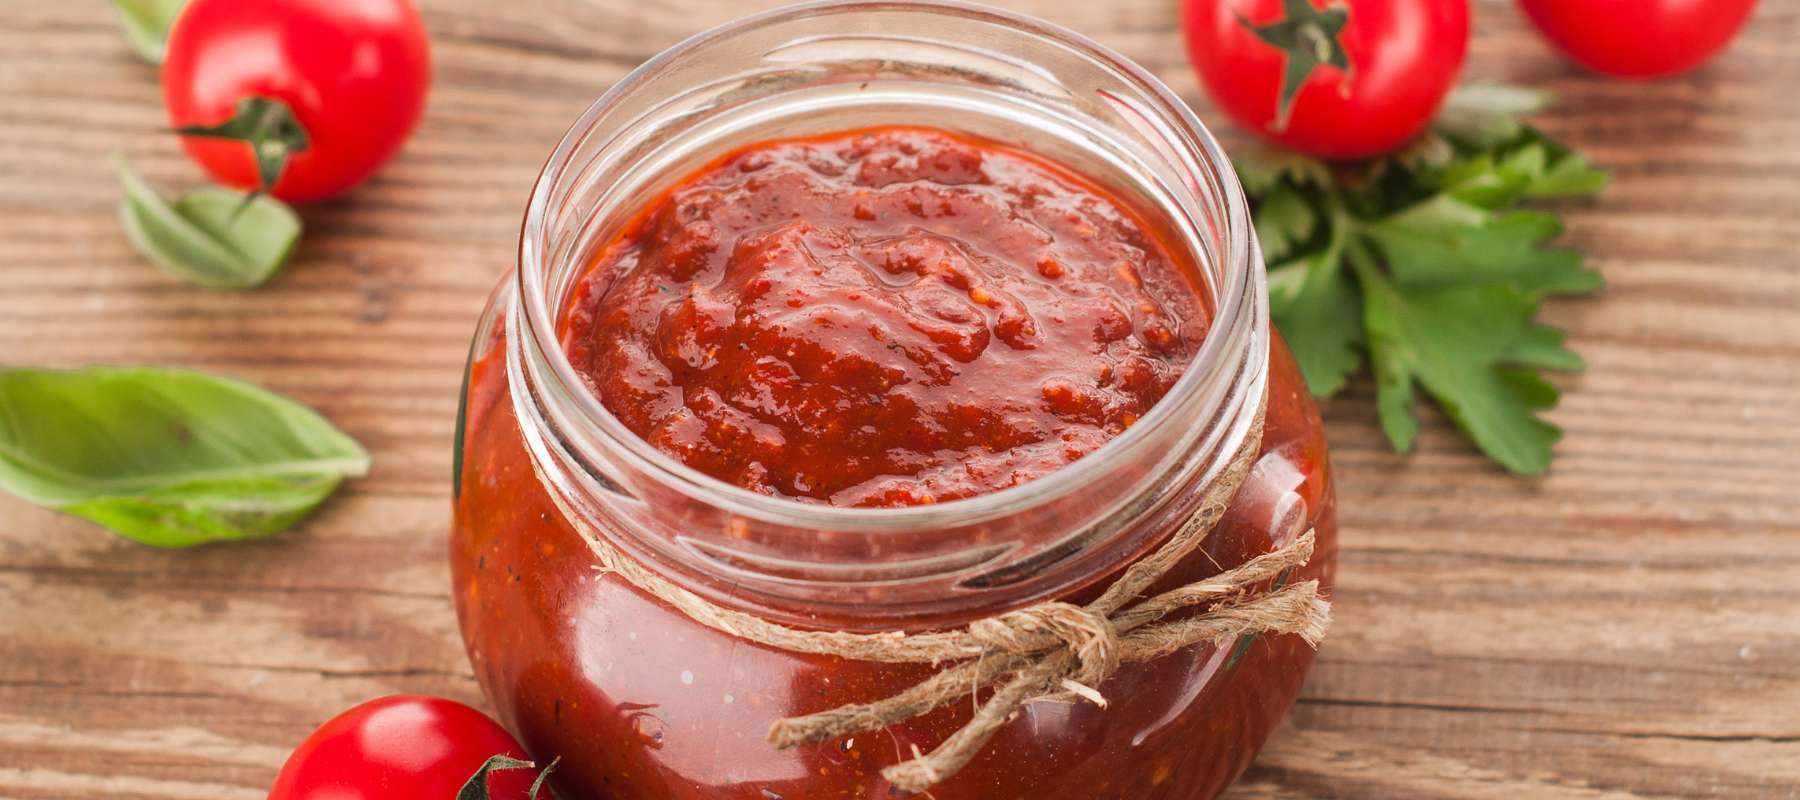 How to make cherry tomato jam